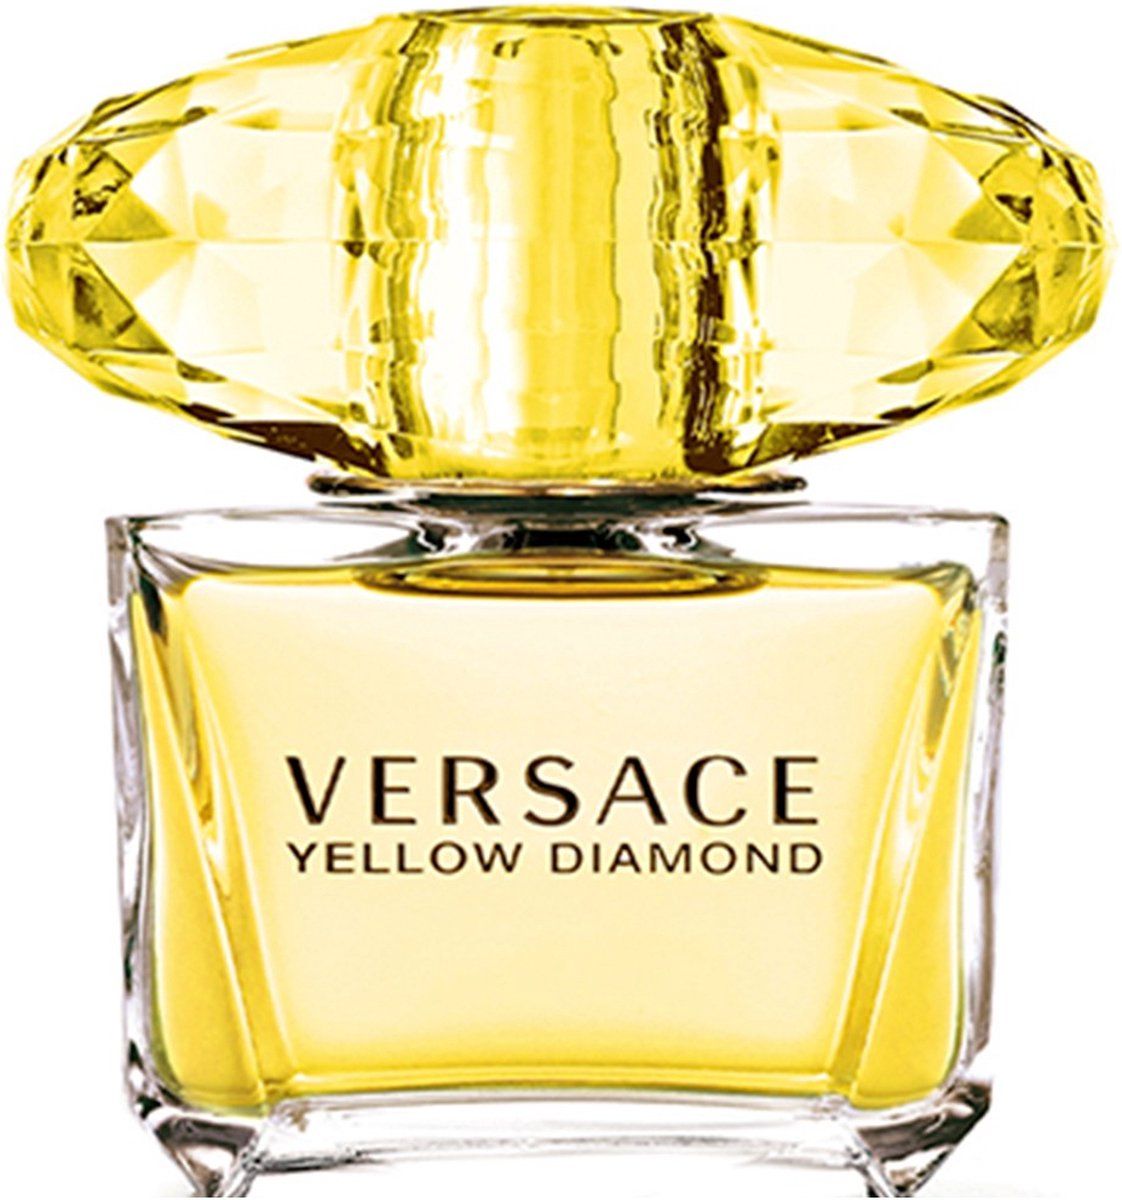 Versace Yellow Diamond Eau de Toilette Spray 90 ml